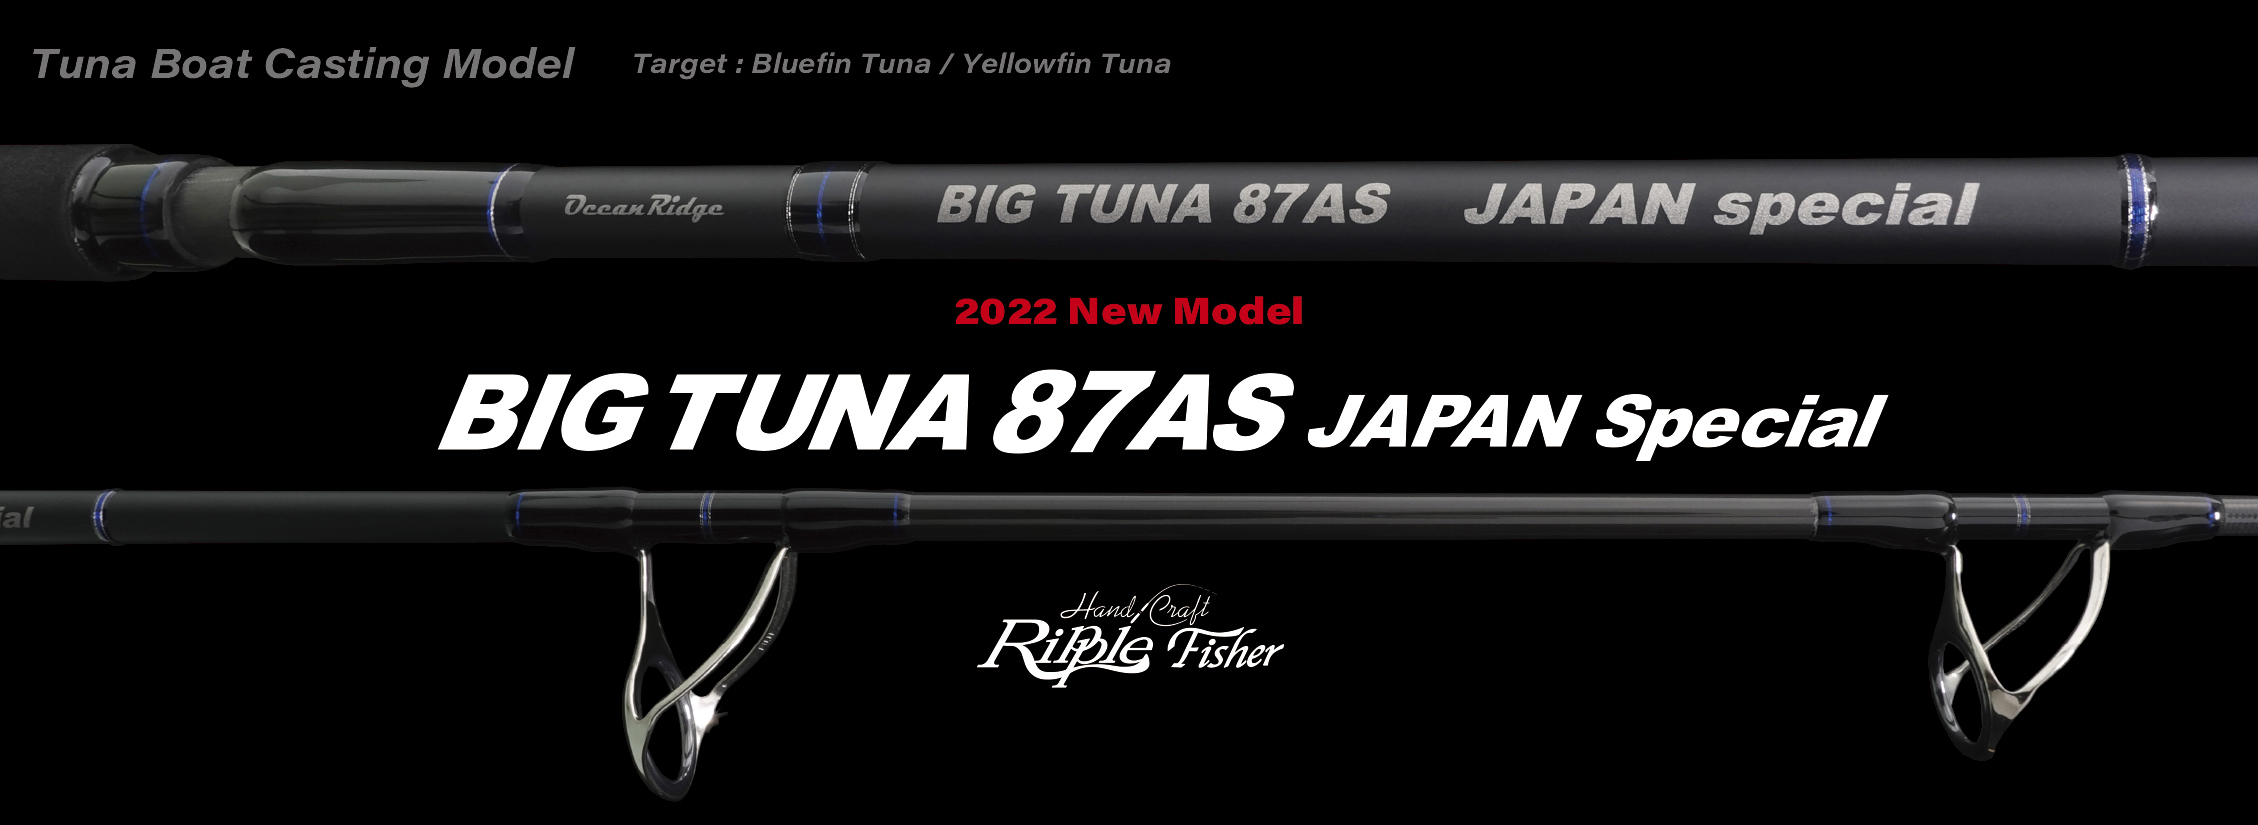 BIG TUNA 87AS JAPAN Special - RIPPLE FISHER 2022